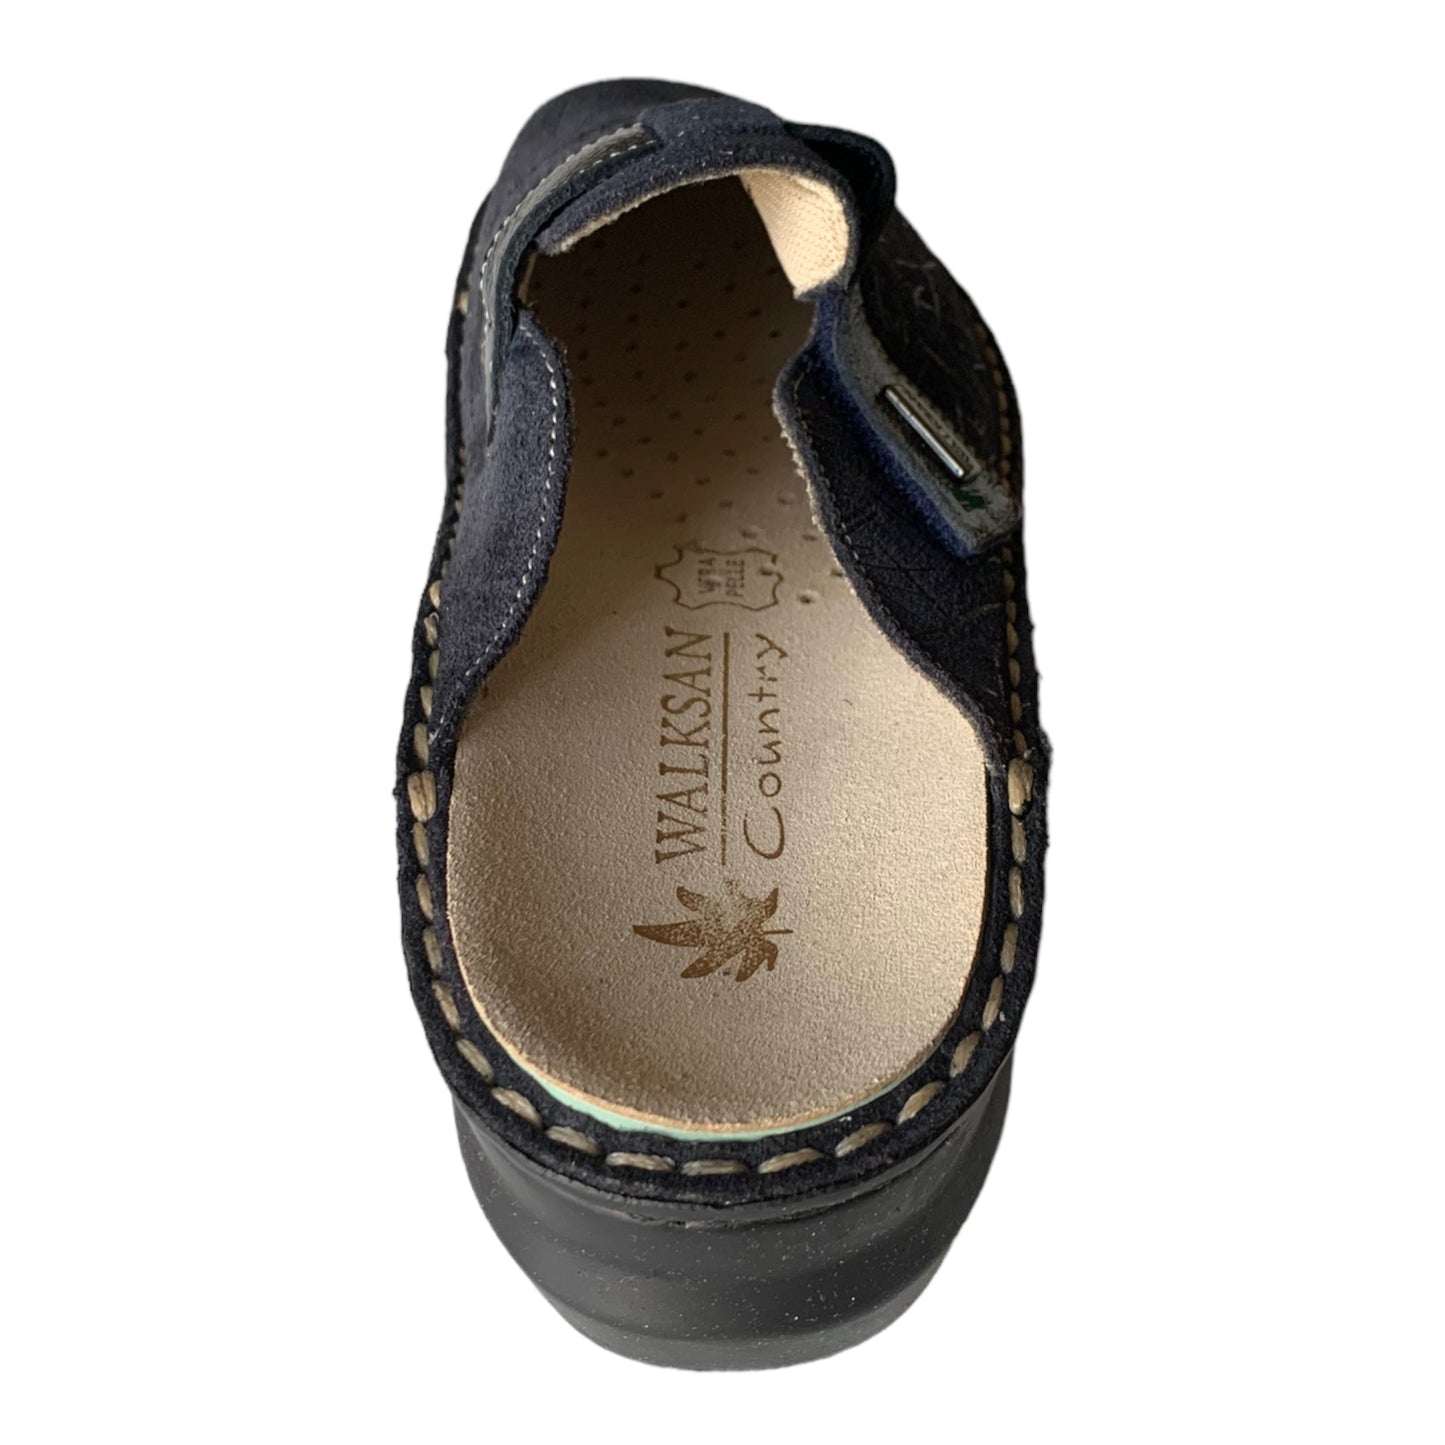 Pantofola donna Susimoda linea comfort 6230